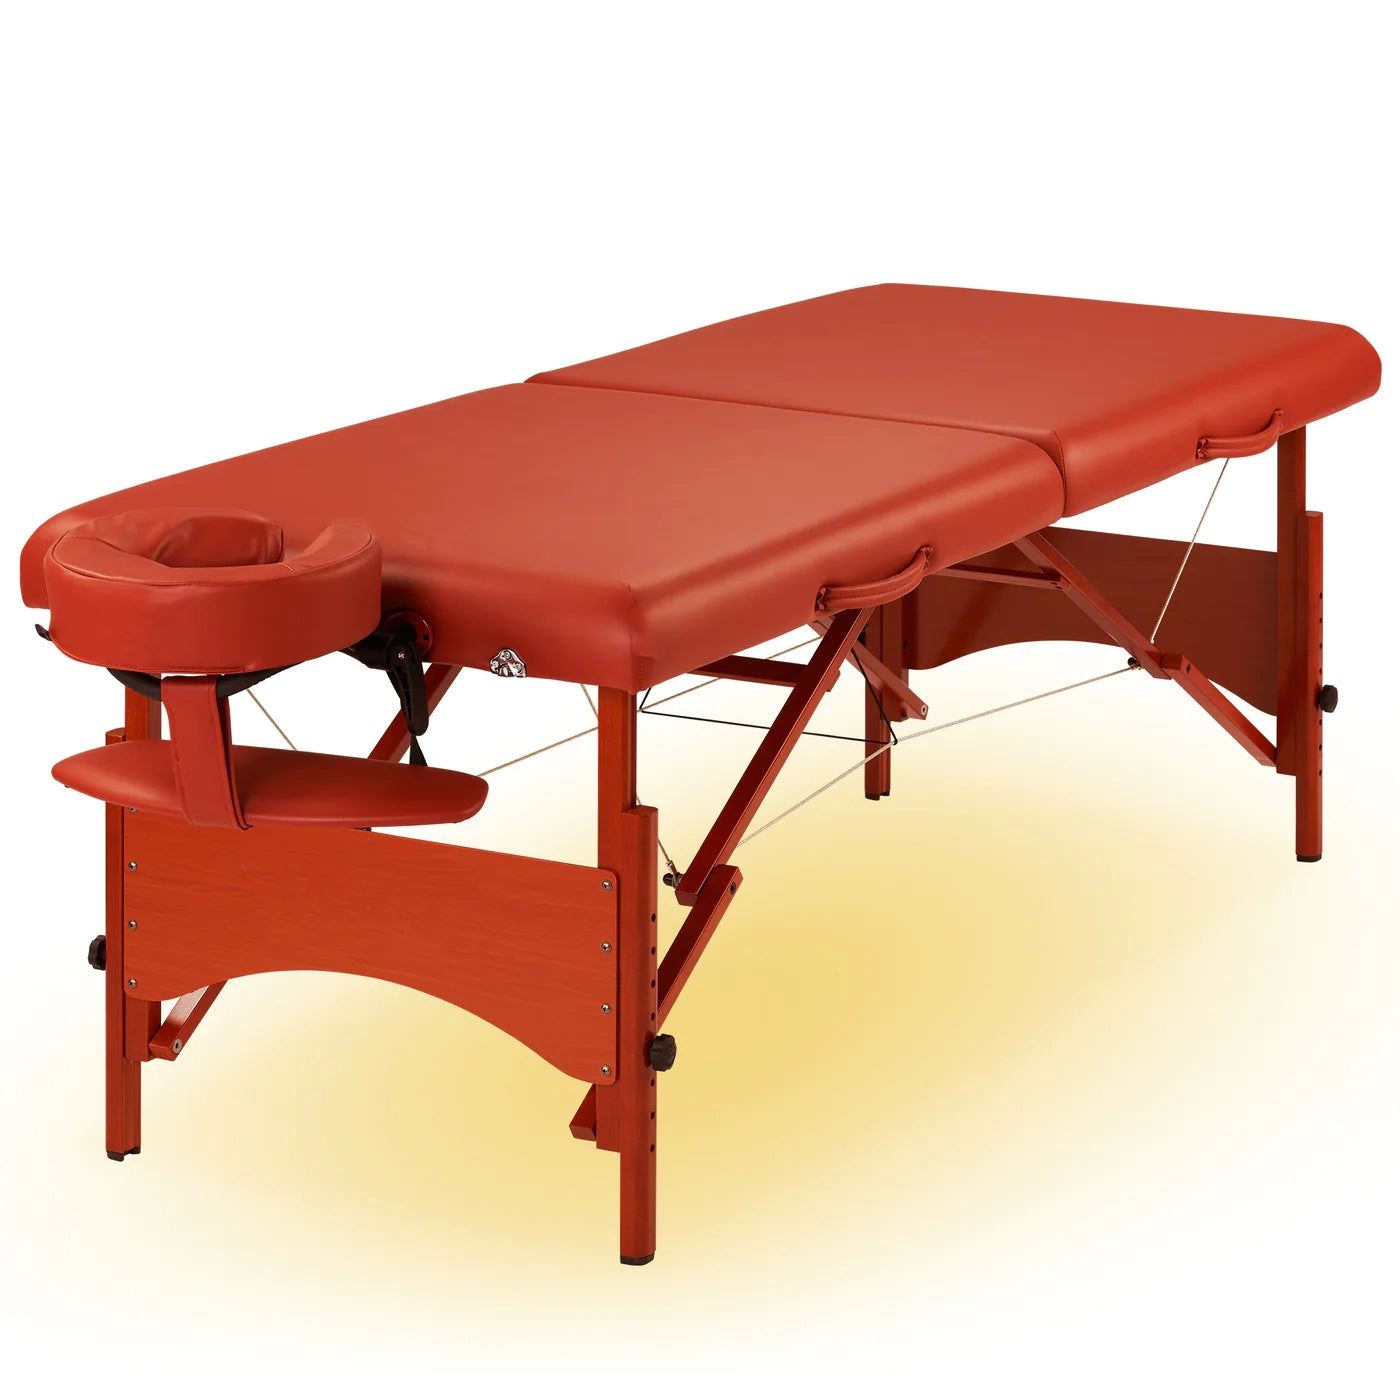 Spabodega 31" SANTANA Portable Massage Table Package